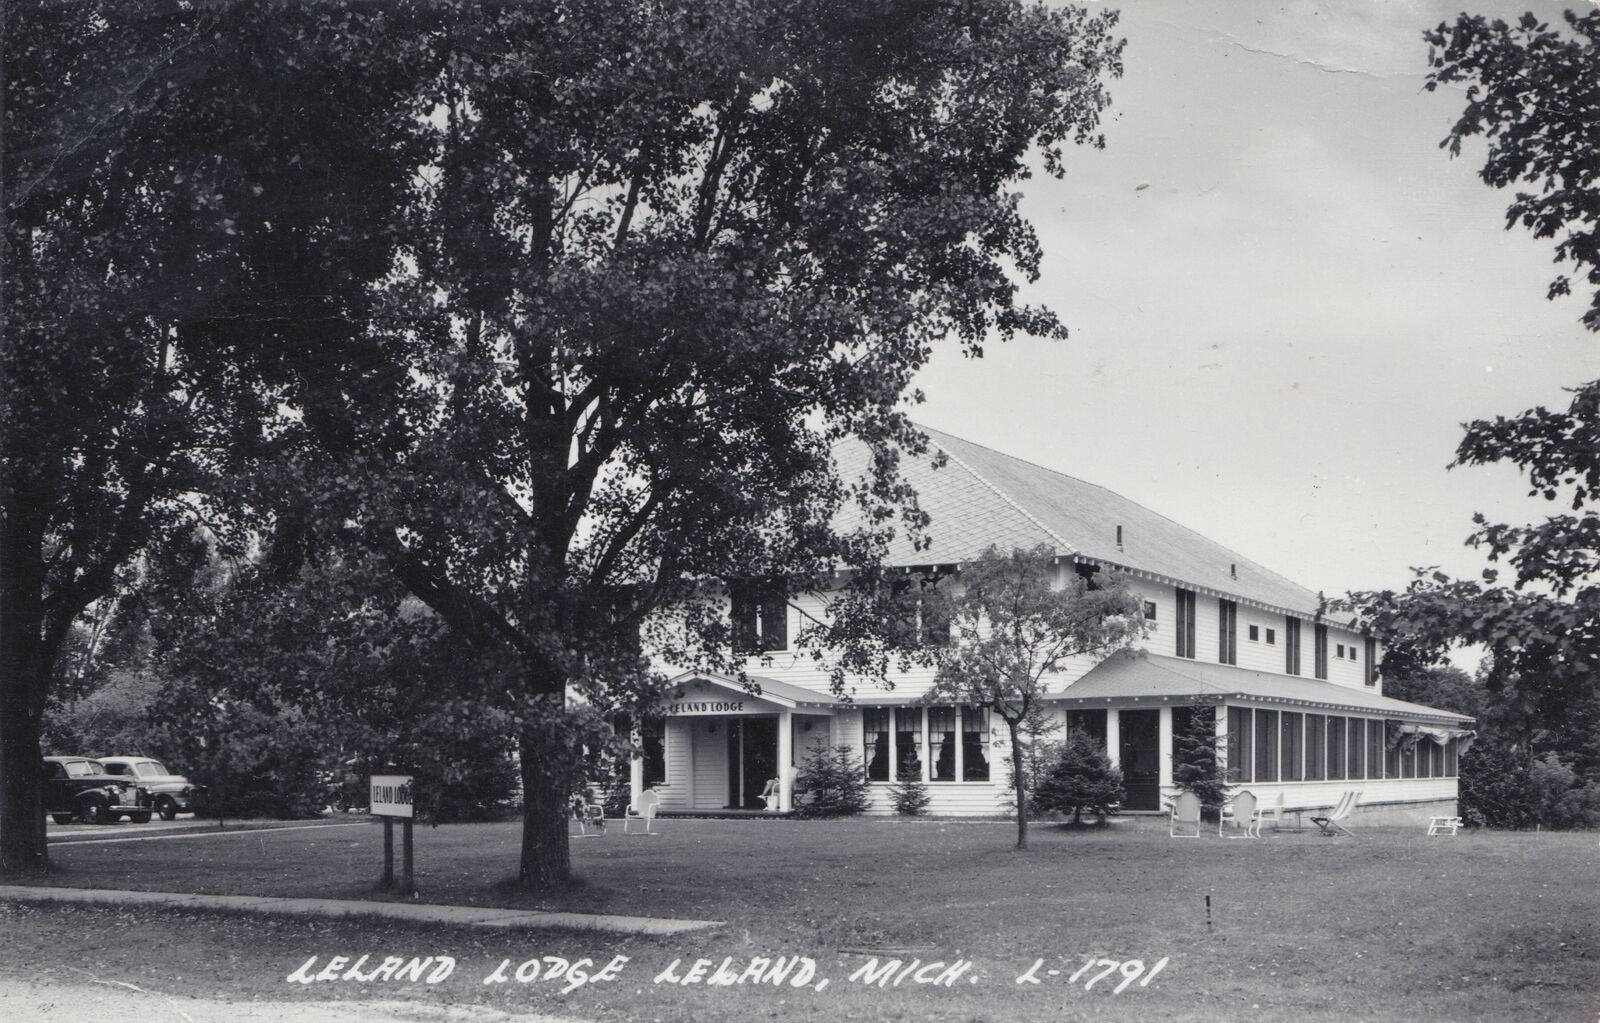 NW Leland MI RPPC 1940s LELAND LODGE previously was the THE NICHOLAS HOTEL